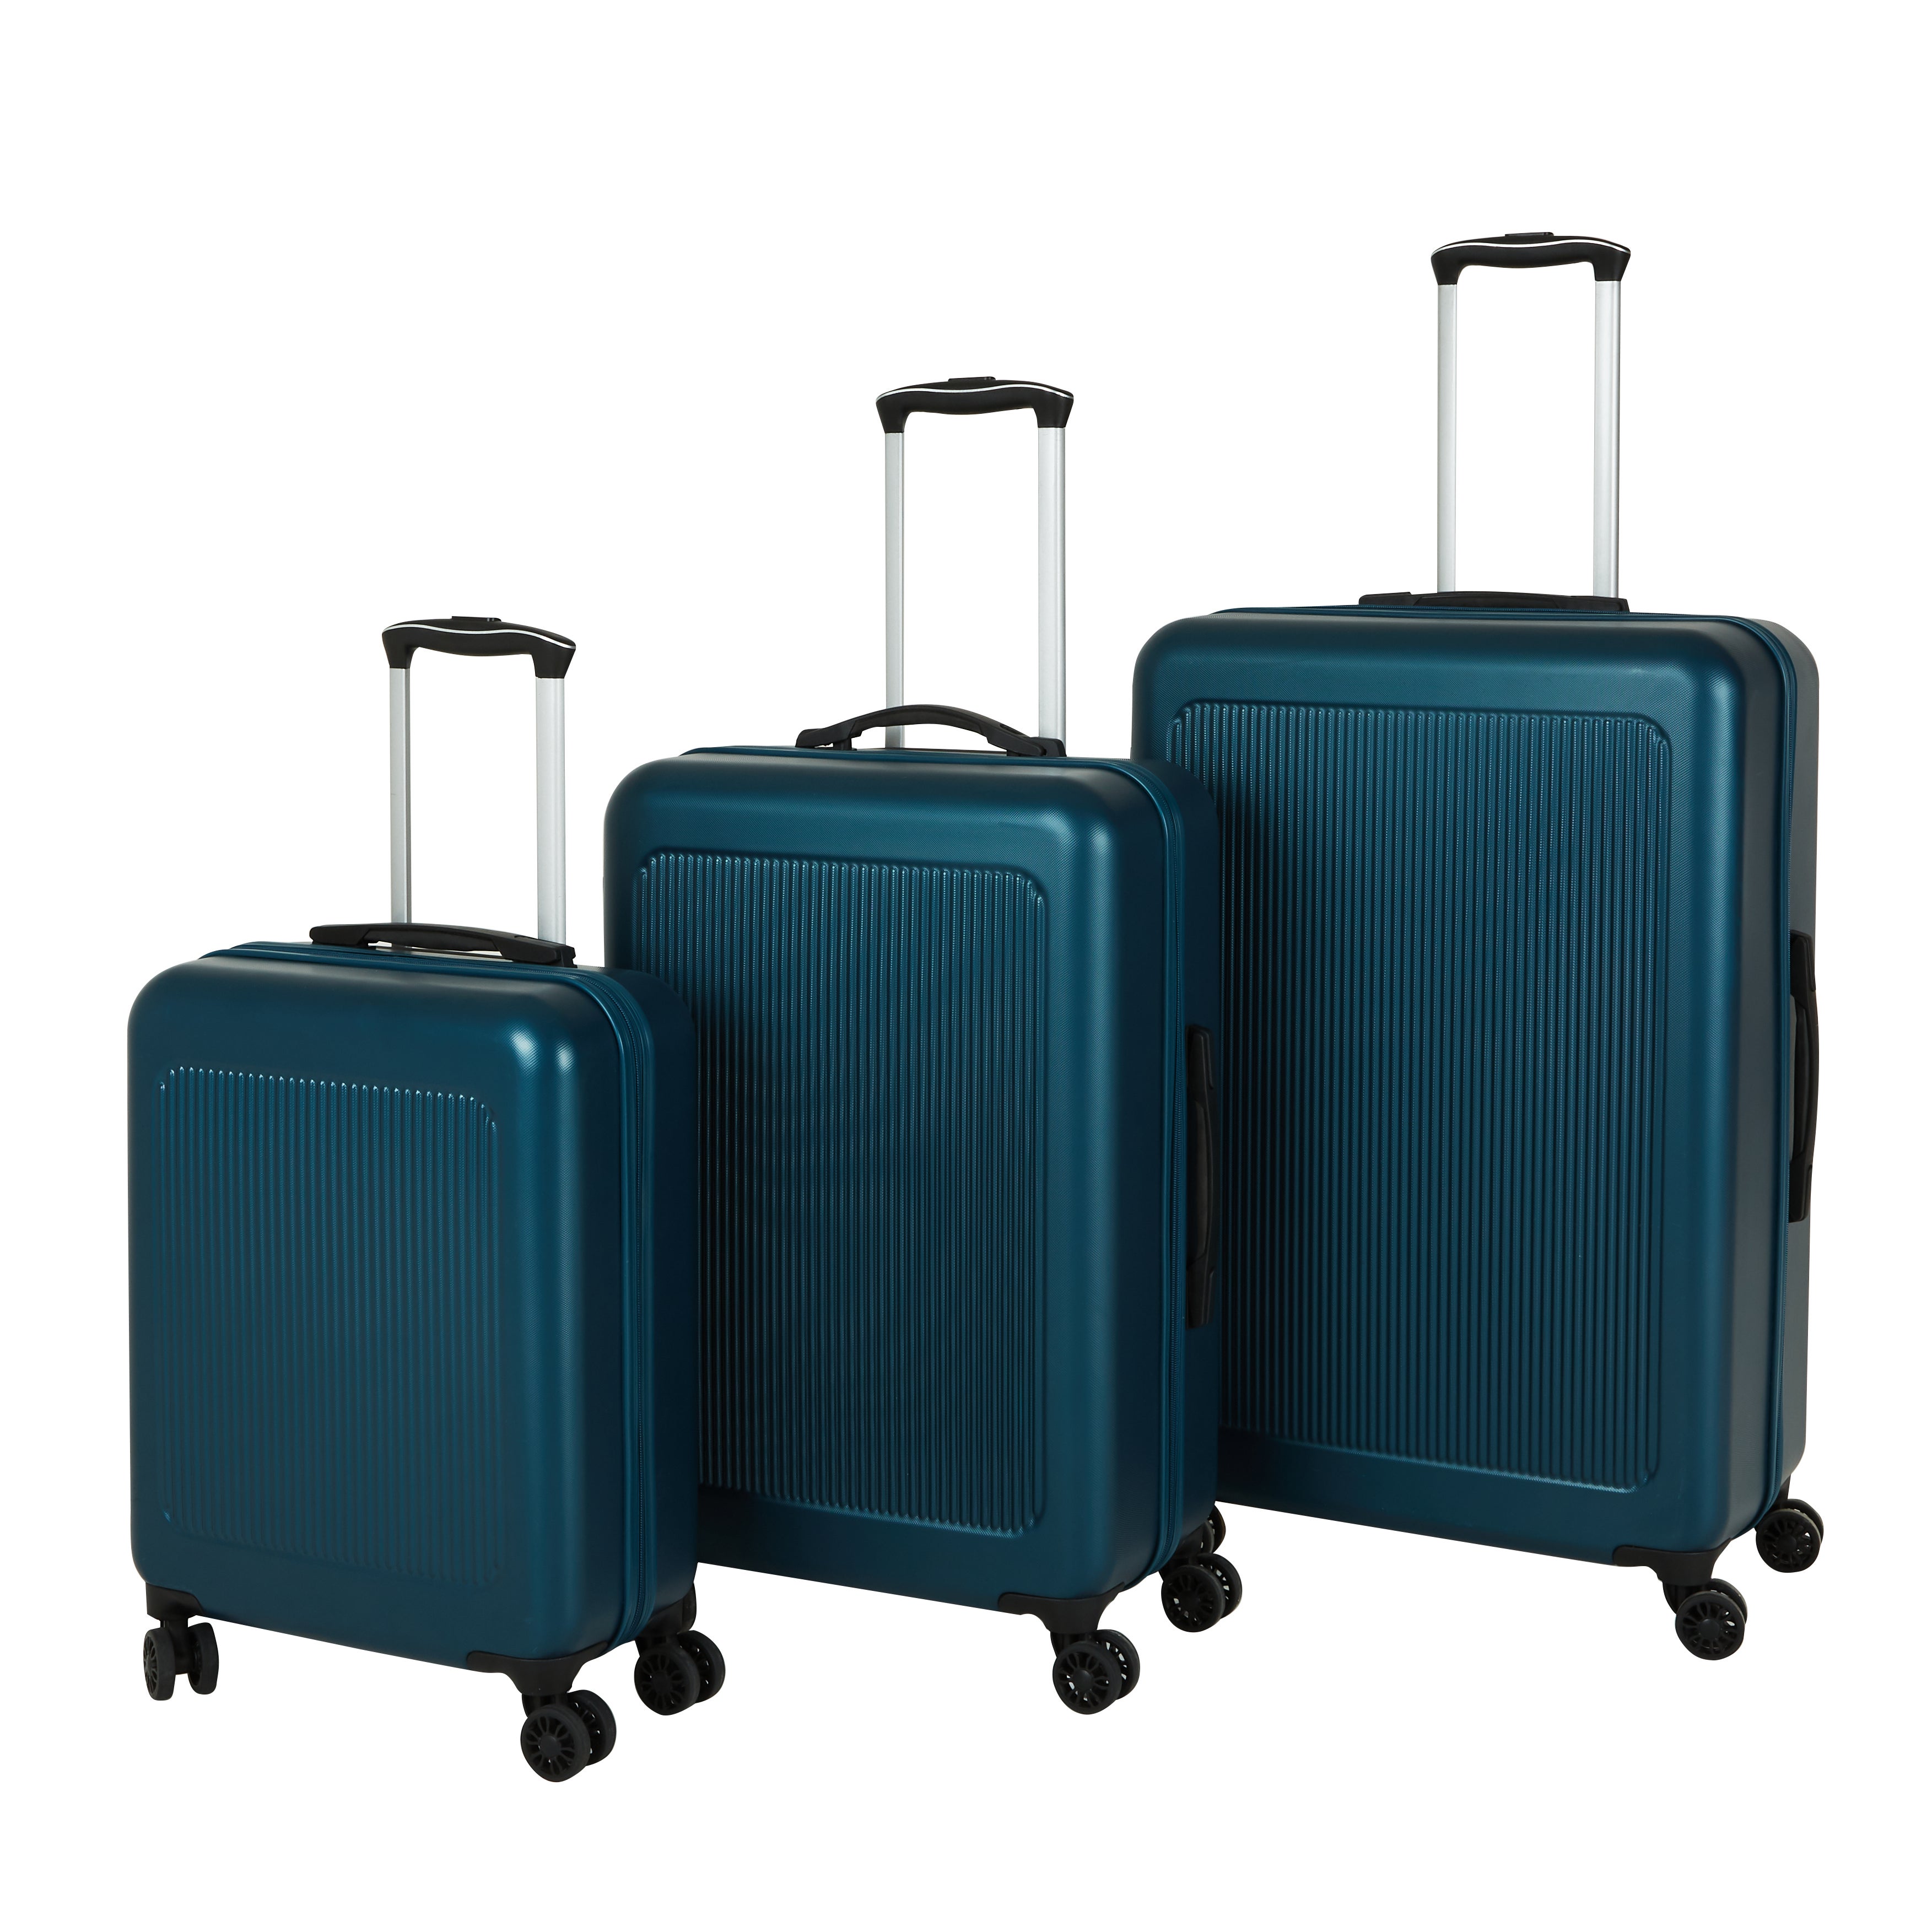 Luggage | Suitcases & Cabin Luggage | Dunelm